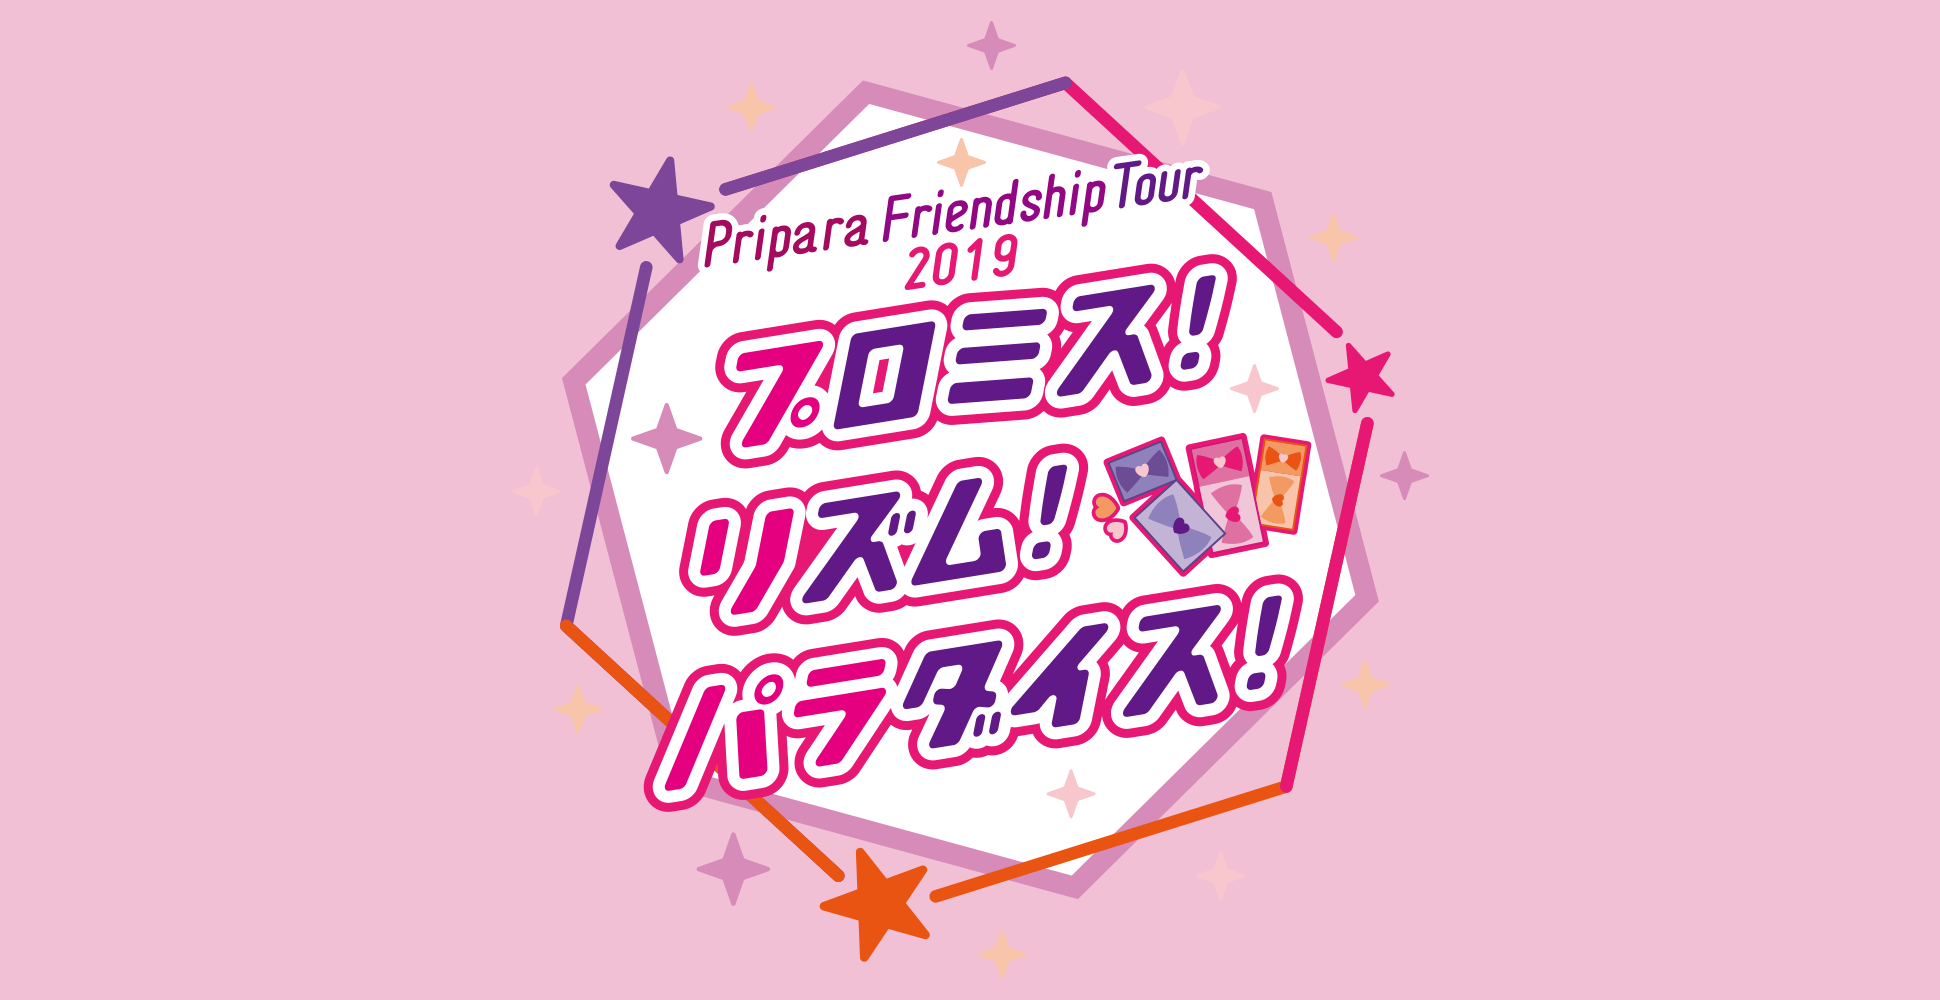 Pripara Friendship Tour 2019　プロミス！リズム！パラダイス！ 東京 舞浜アンフィシアター チケット付き ツアー参加者特典付き！JTBオフィシャルツアー<